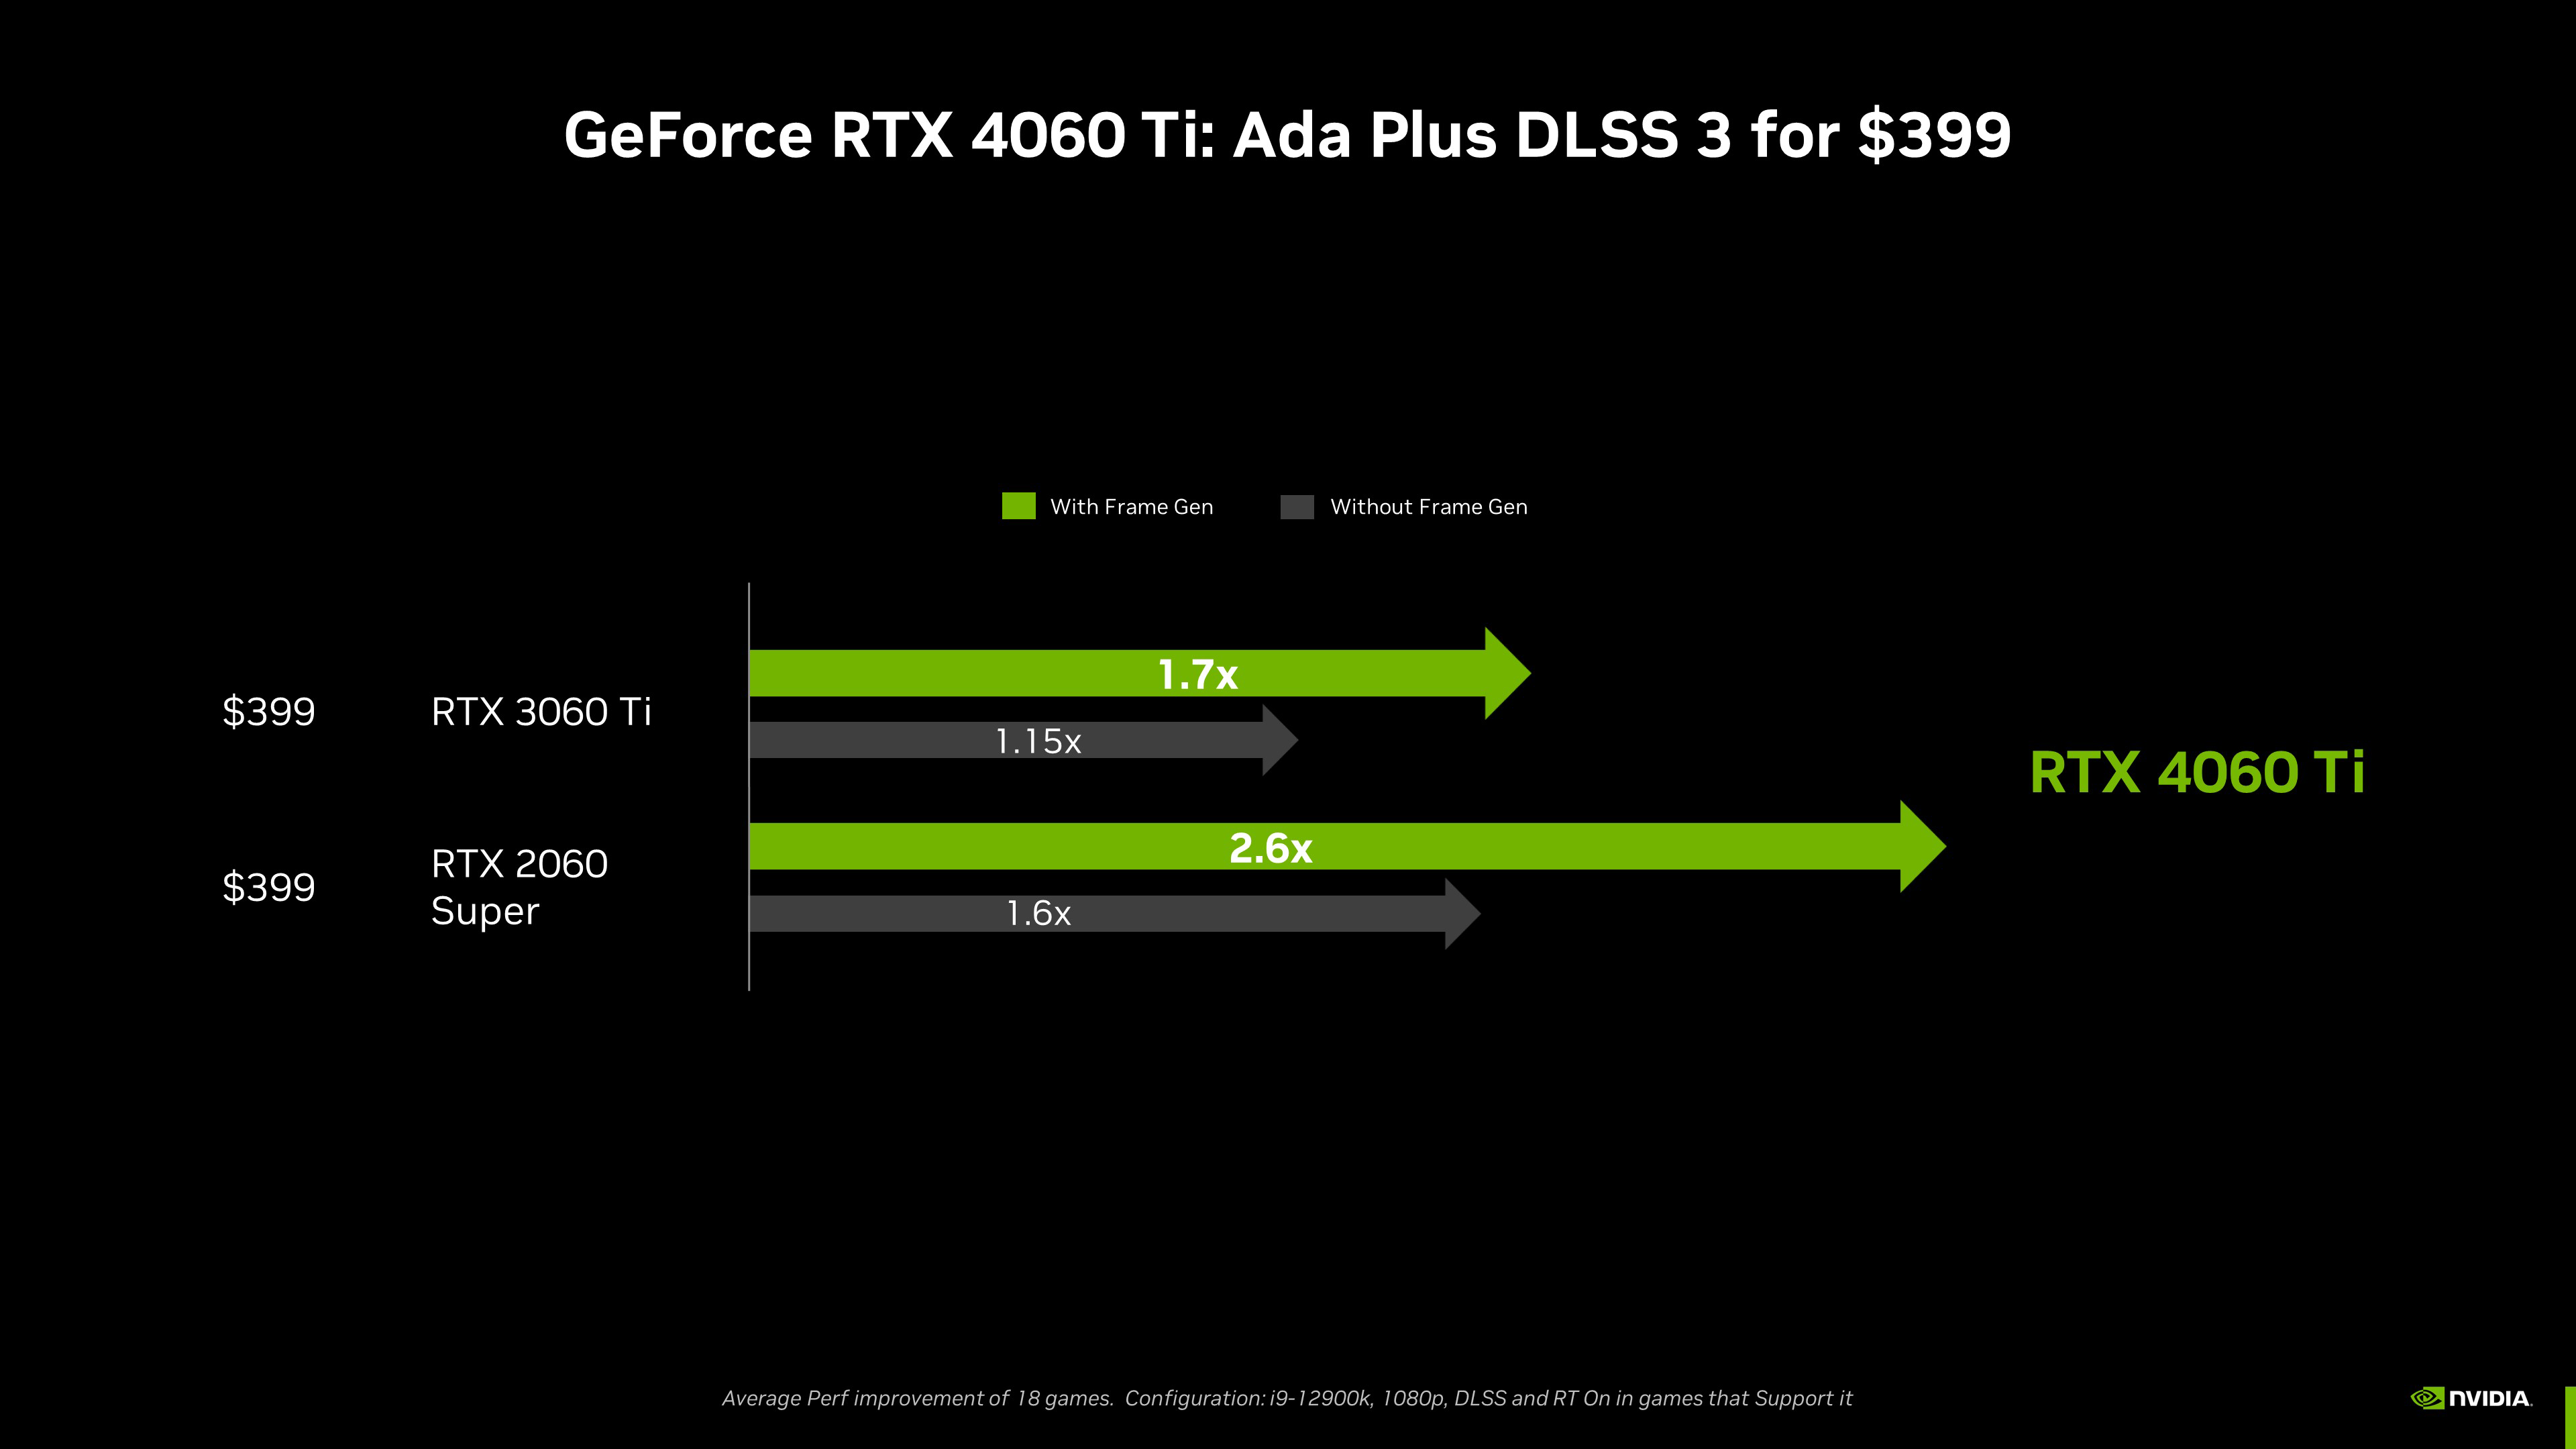 nvidia-geforce-rtx-4060-ti-generational-performance-improvements.png